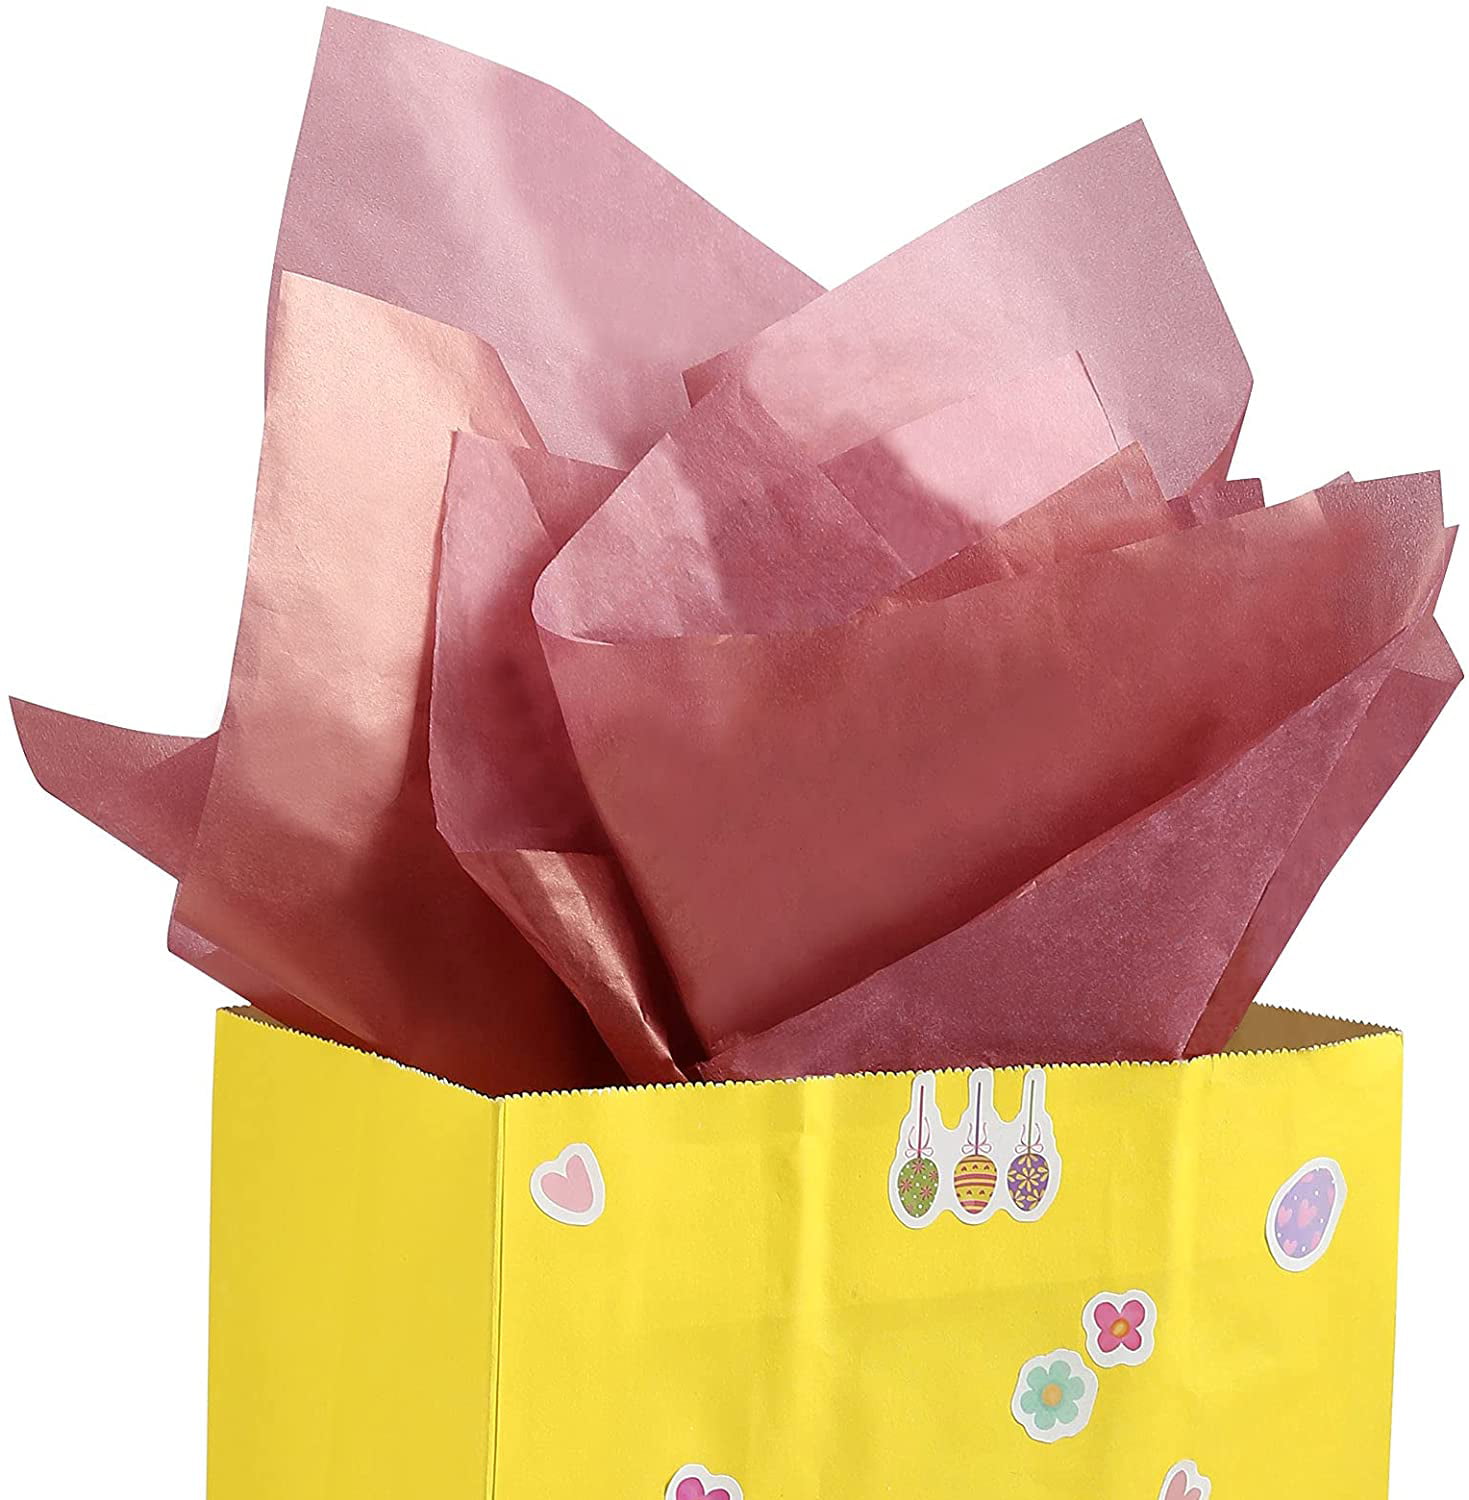  NEBURORA Orange Tissue Paper for Gift Bags 60 Sheets